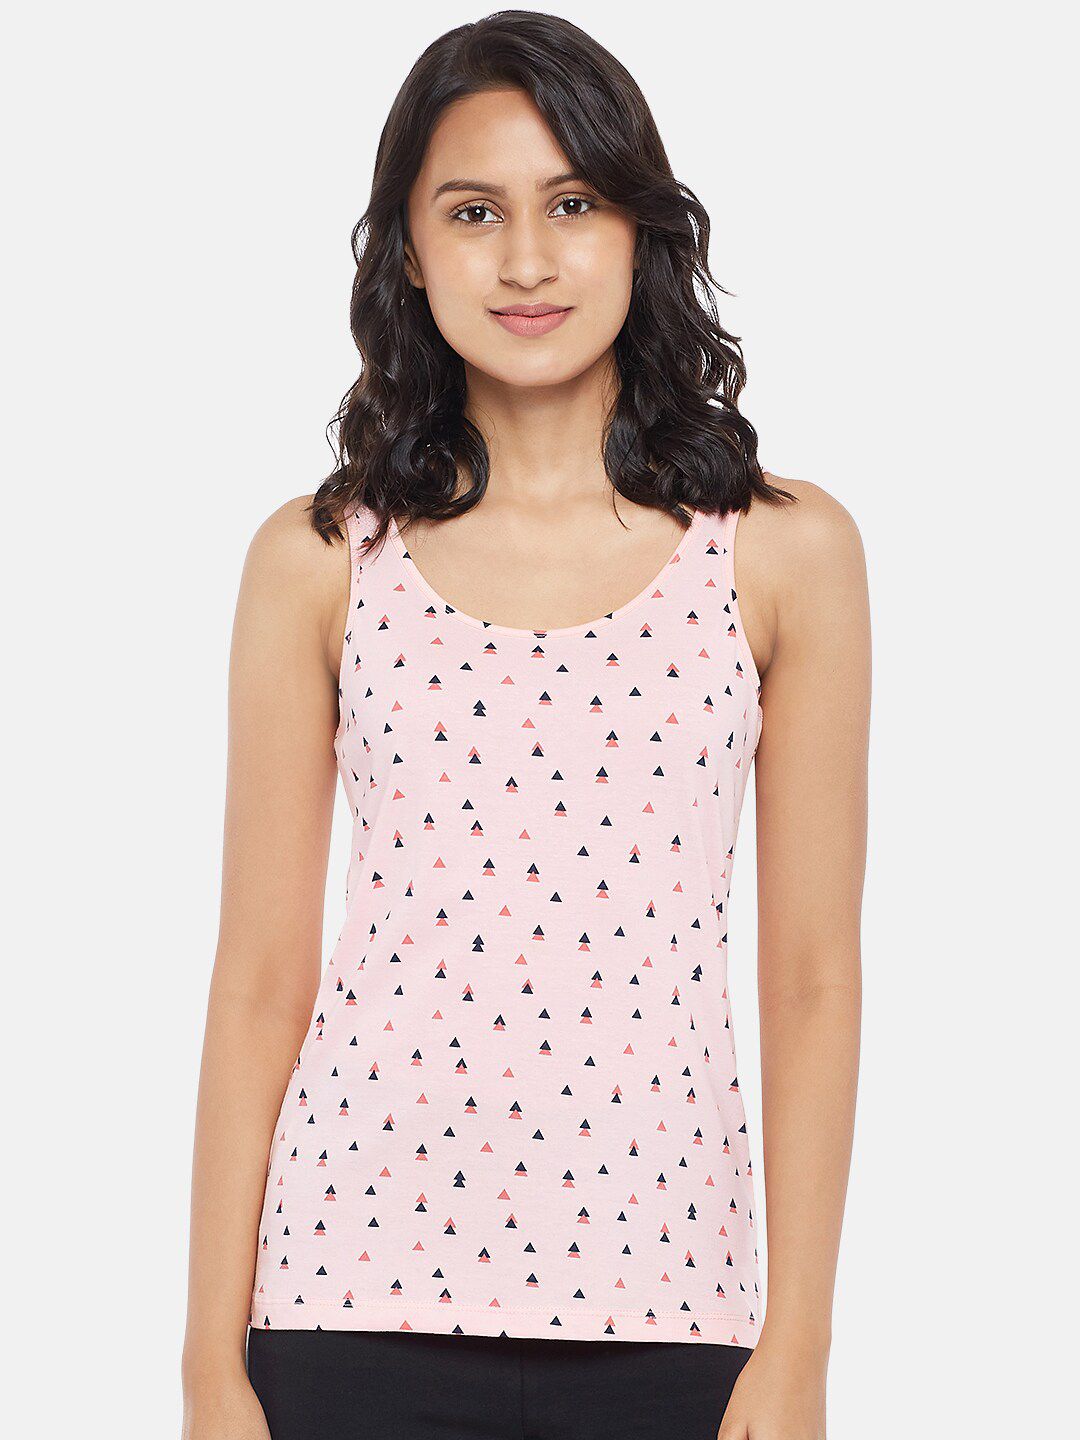 Dreamz by Pantaloons Pink Geometric Printed Sleeveless Regular Lounge tshirt Price in India